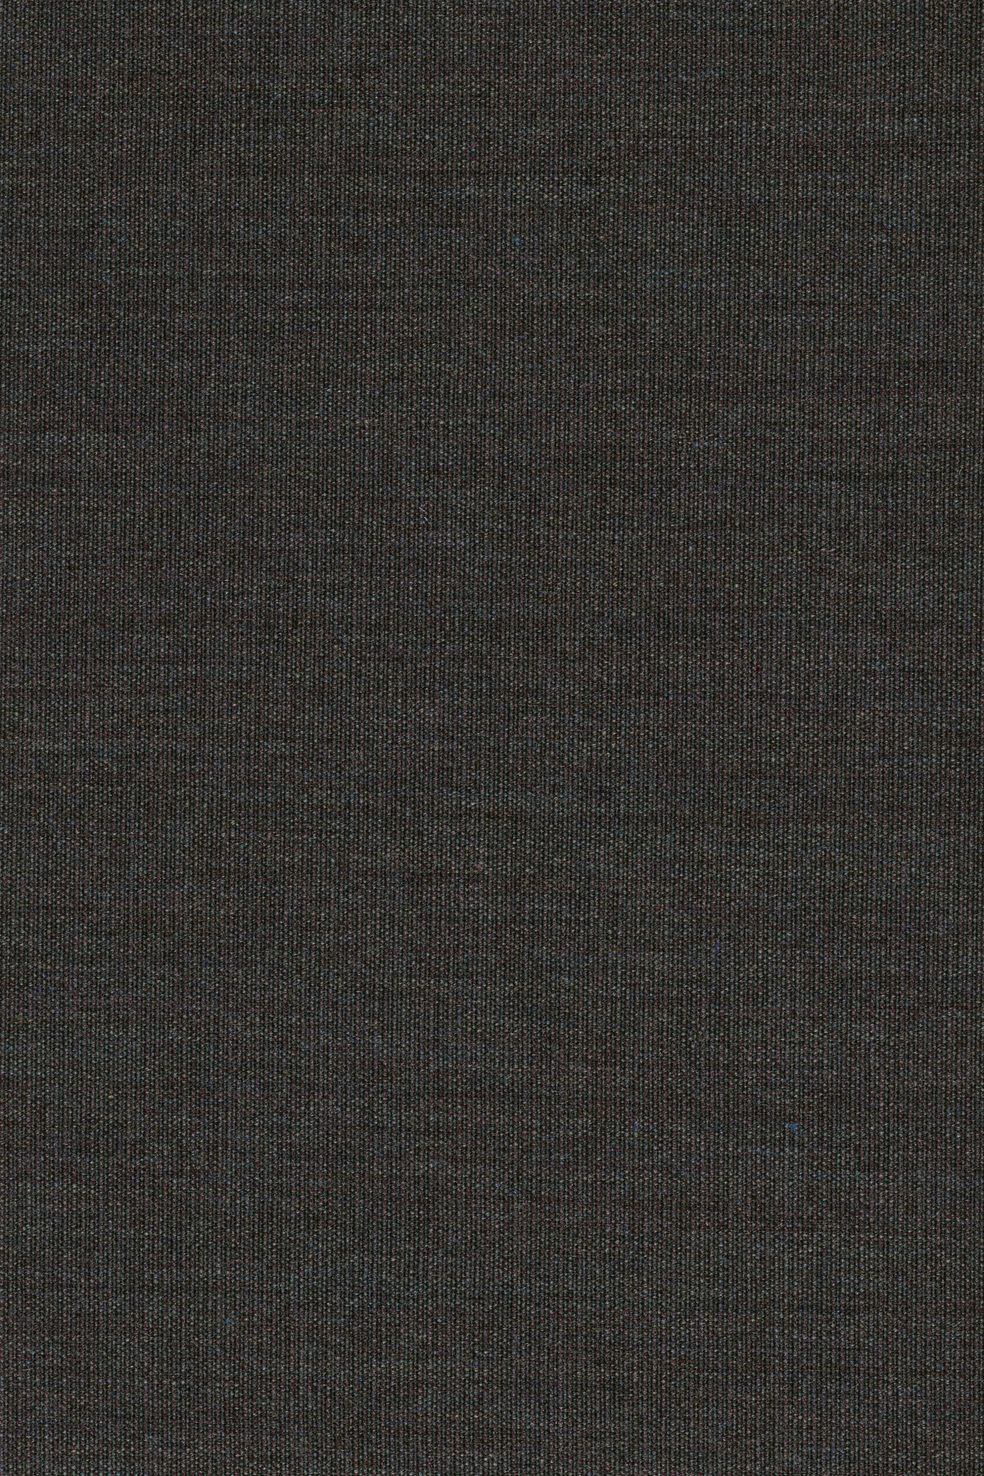 Fabric sample Canvas 2 364 black